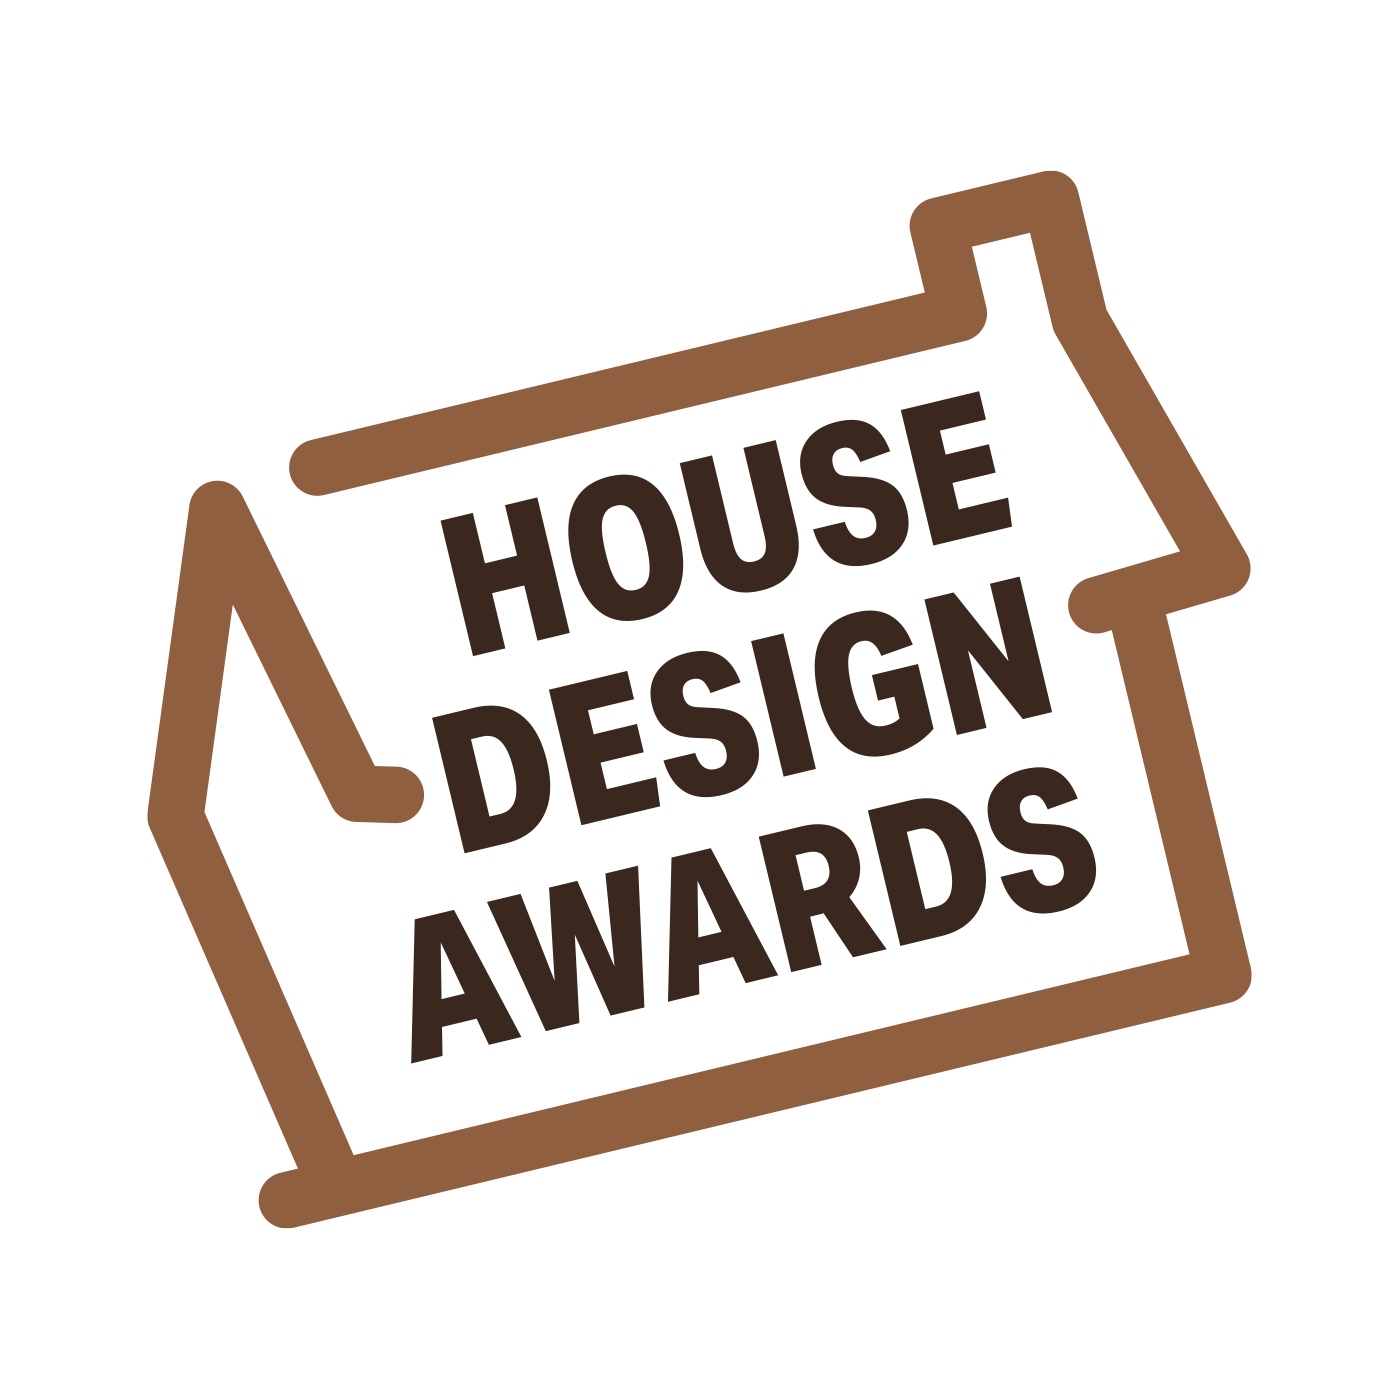 House Design Awards logo